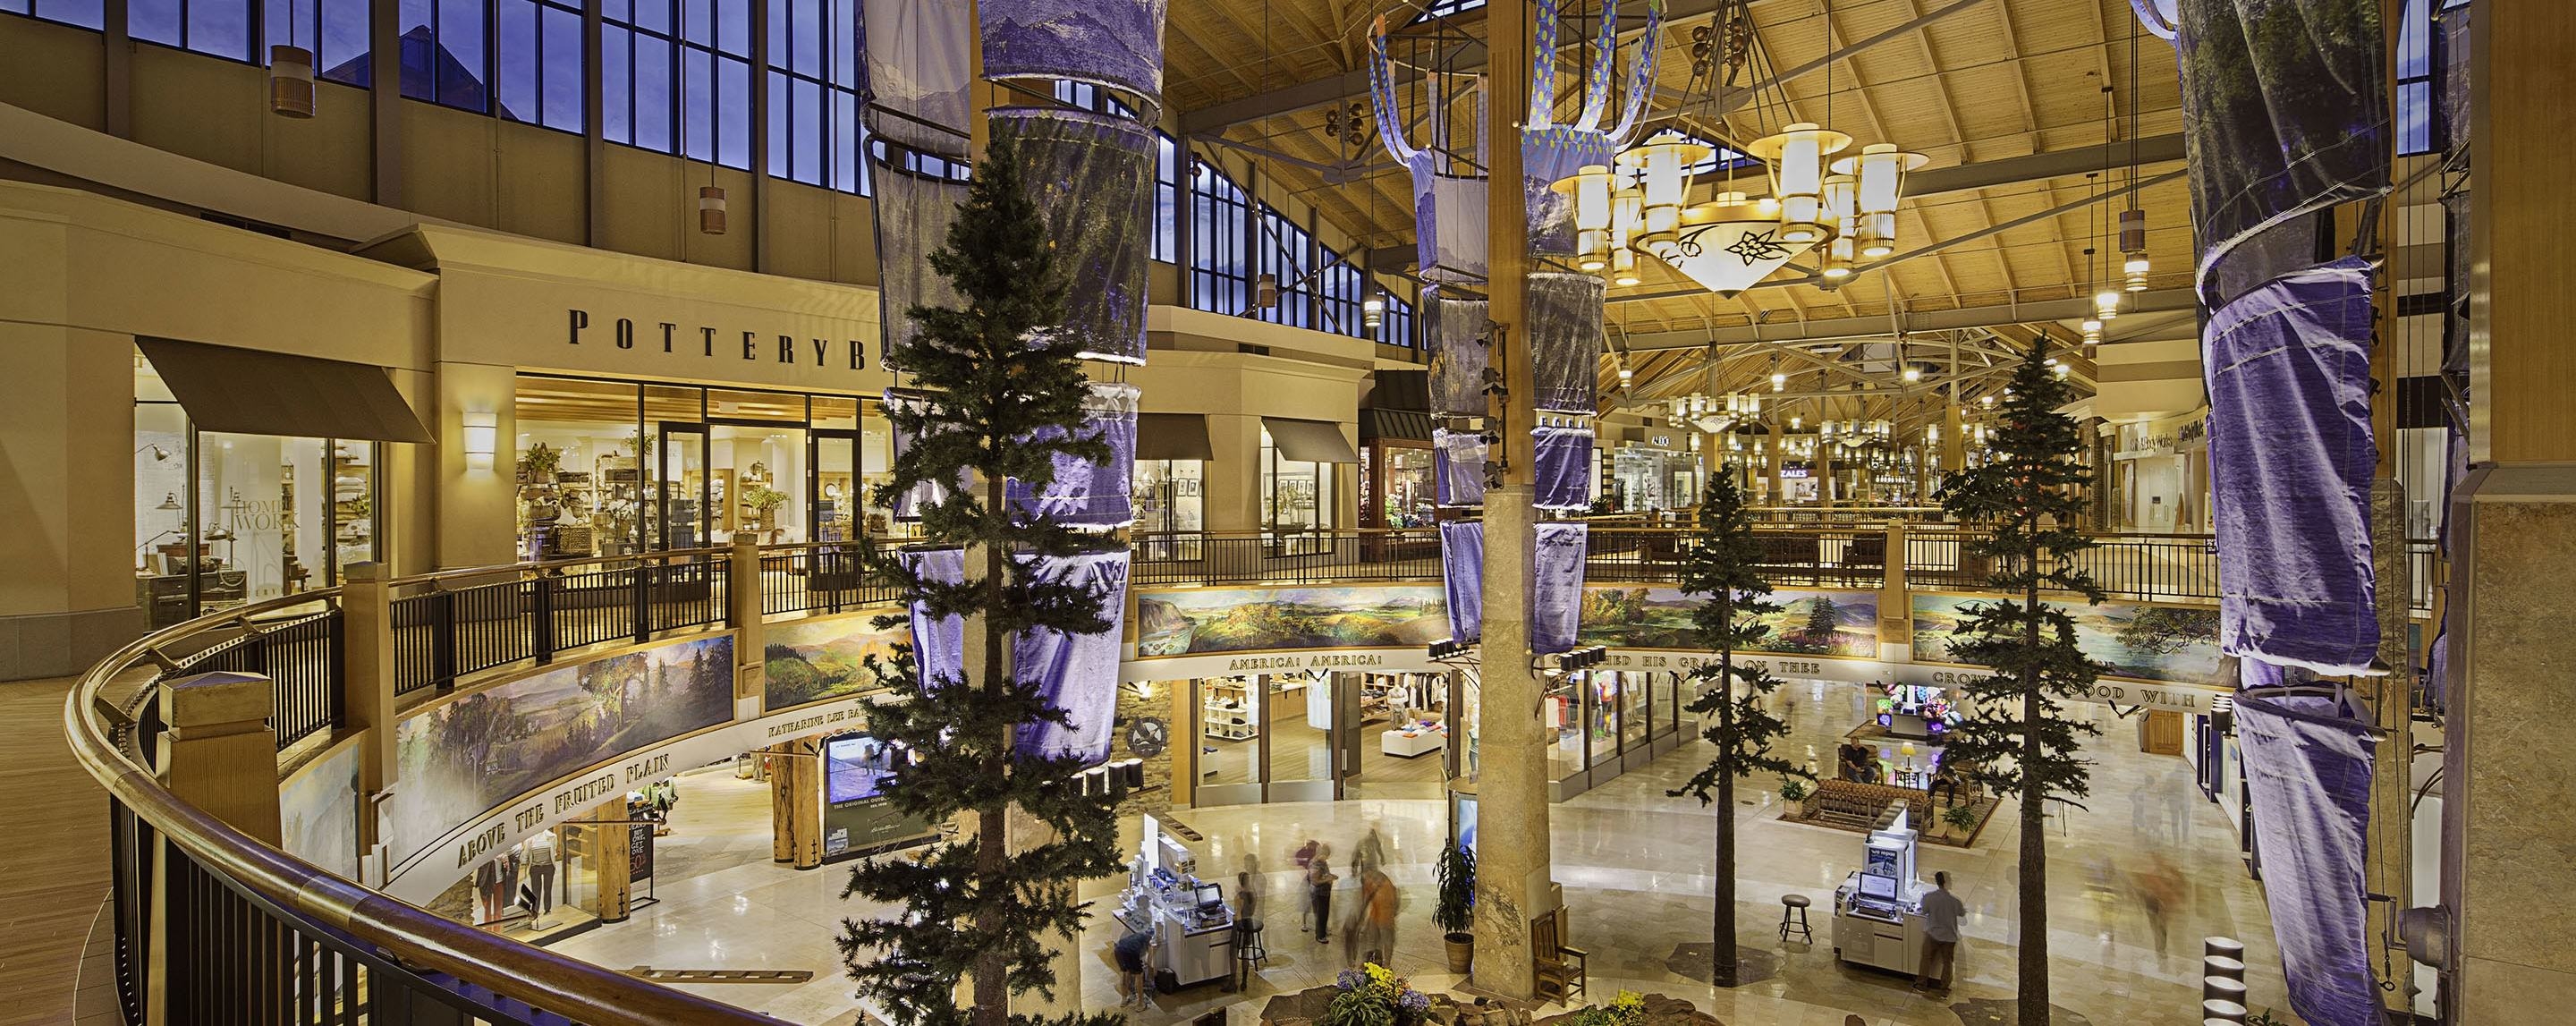 Park meadows mall - Picture of Park meadows mall, Lone Tree - Tripadvisor